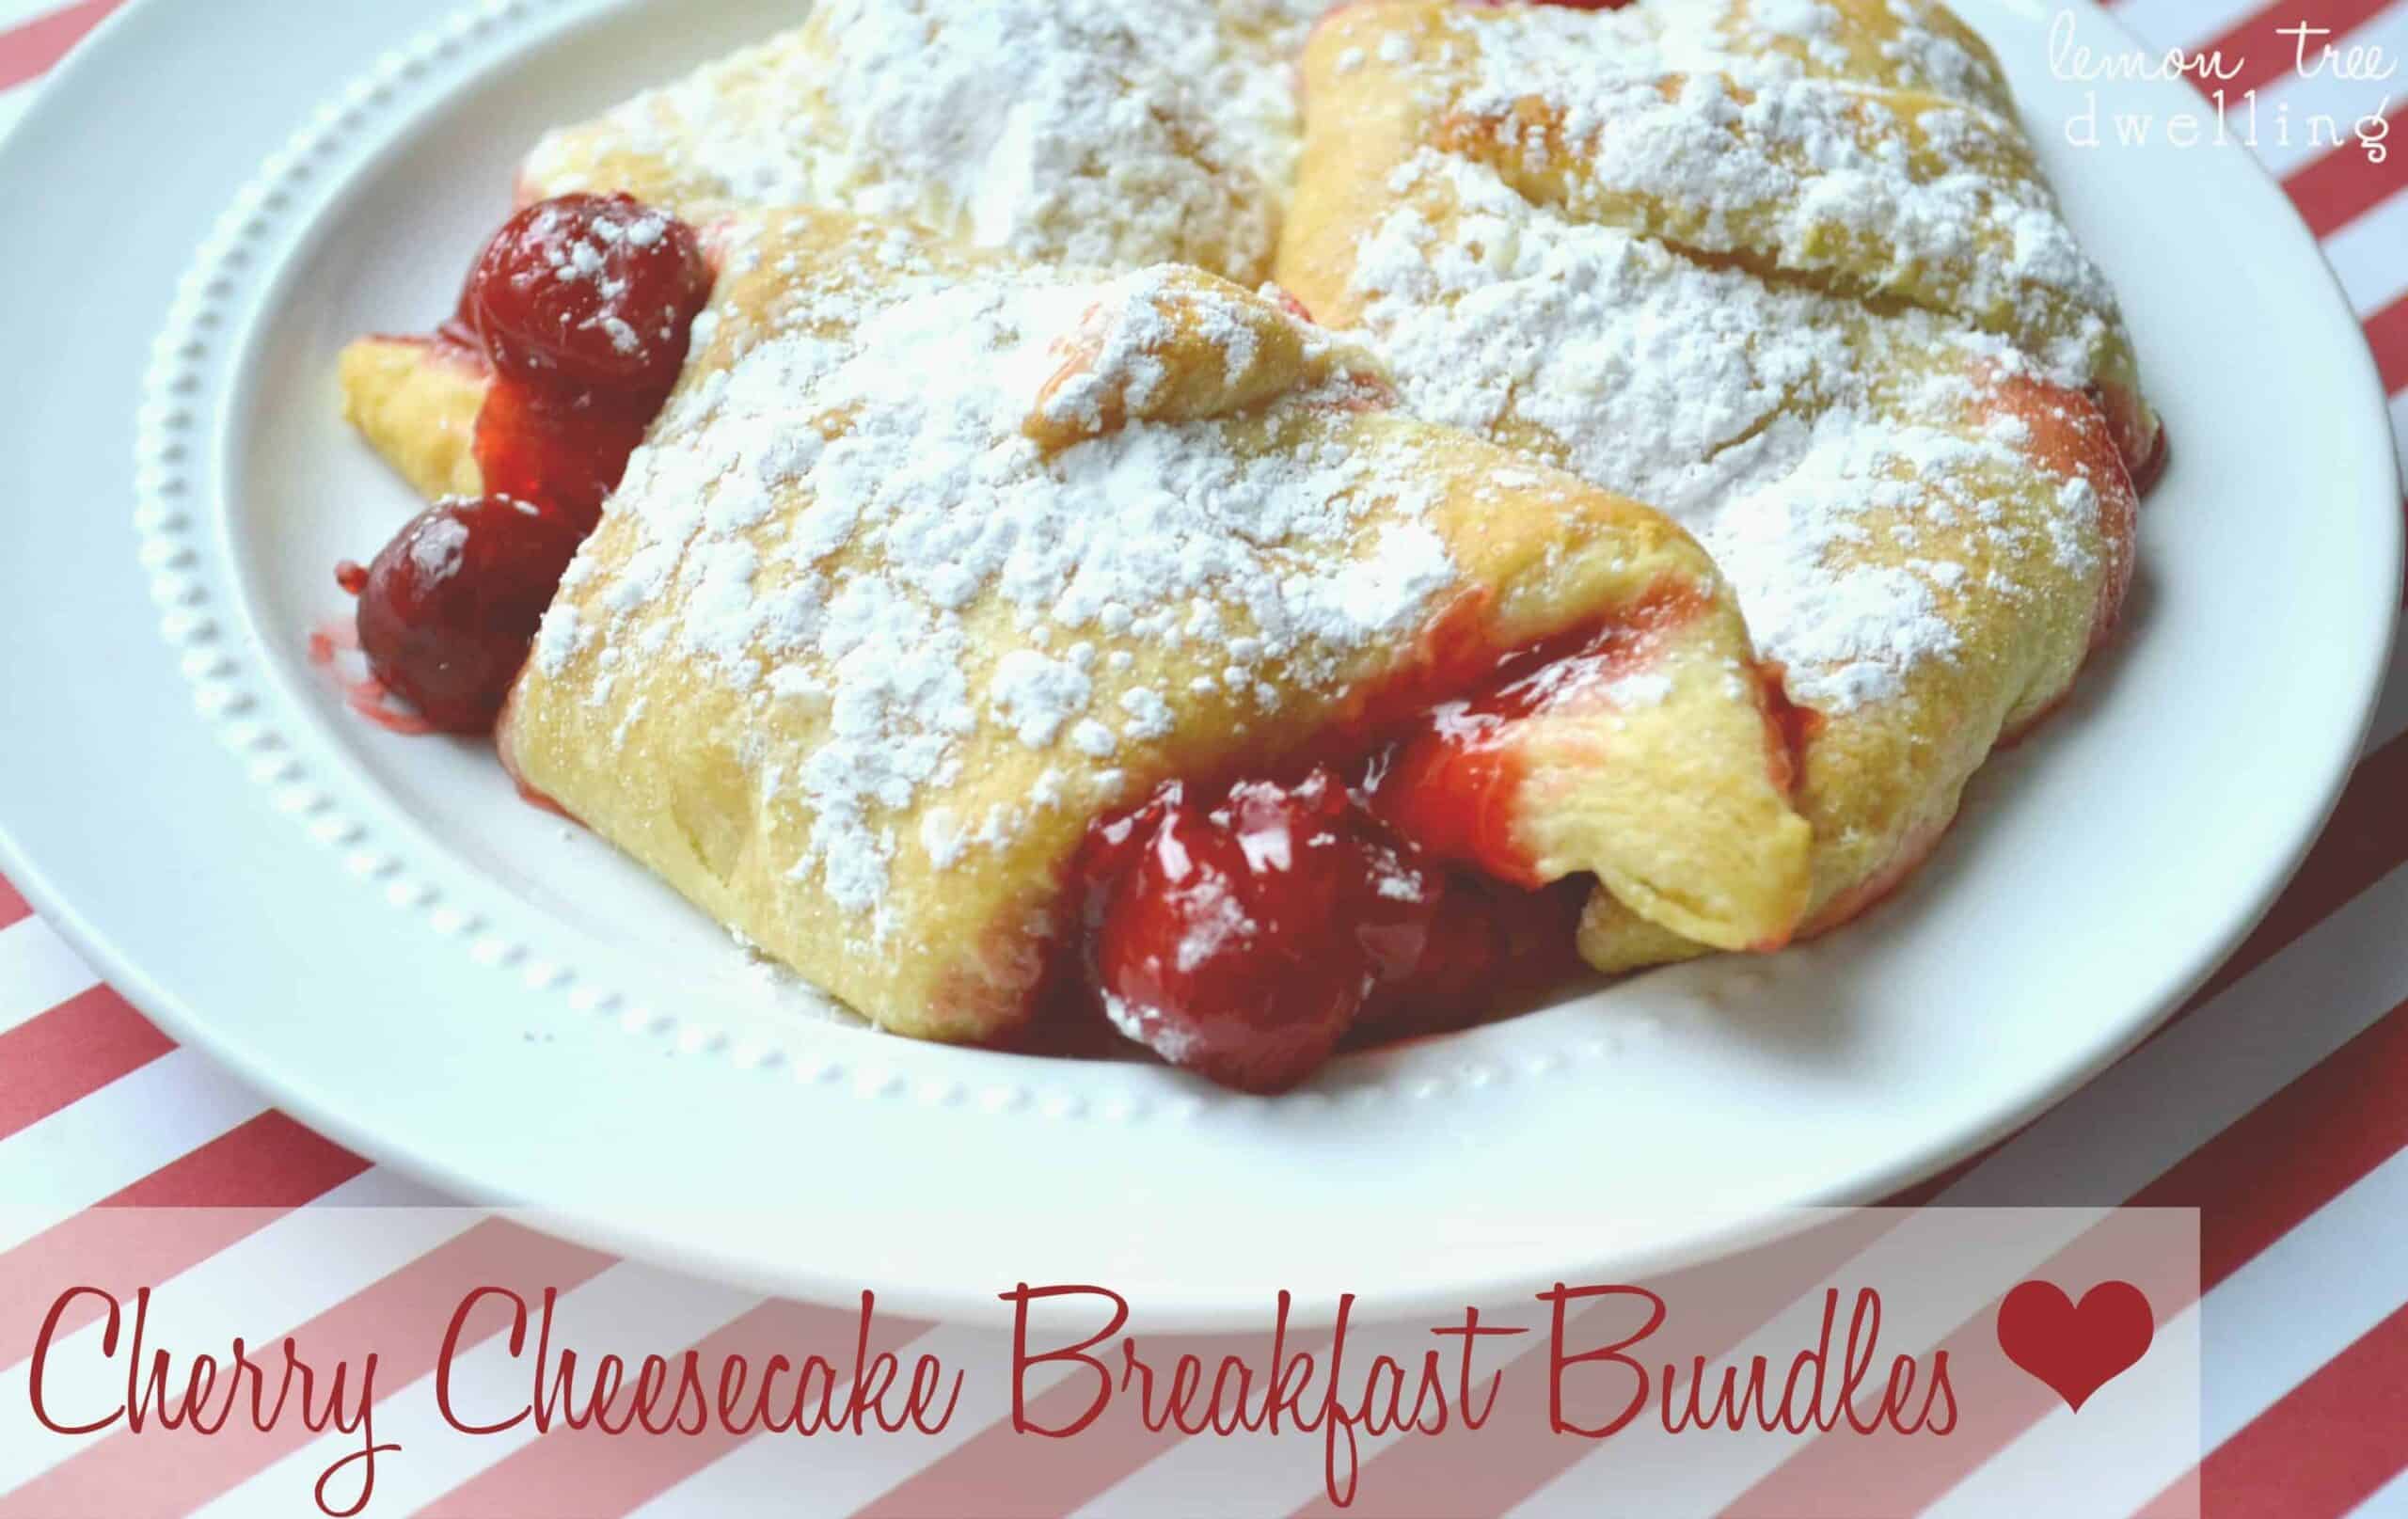 Cherry Cheesecake Breakfast Bundles are a decadent brunch item or a quick cherry dessert.